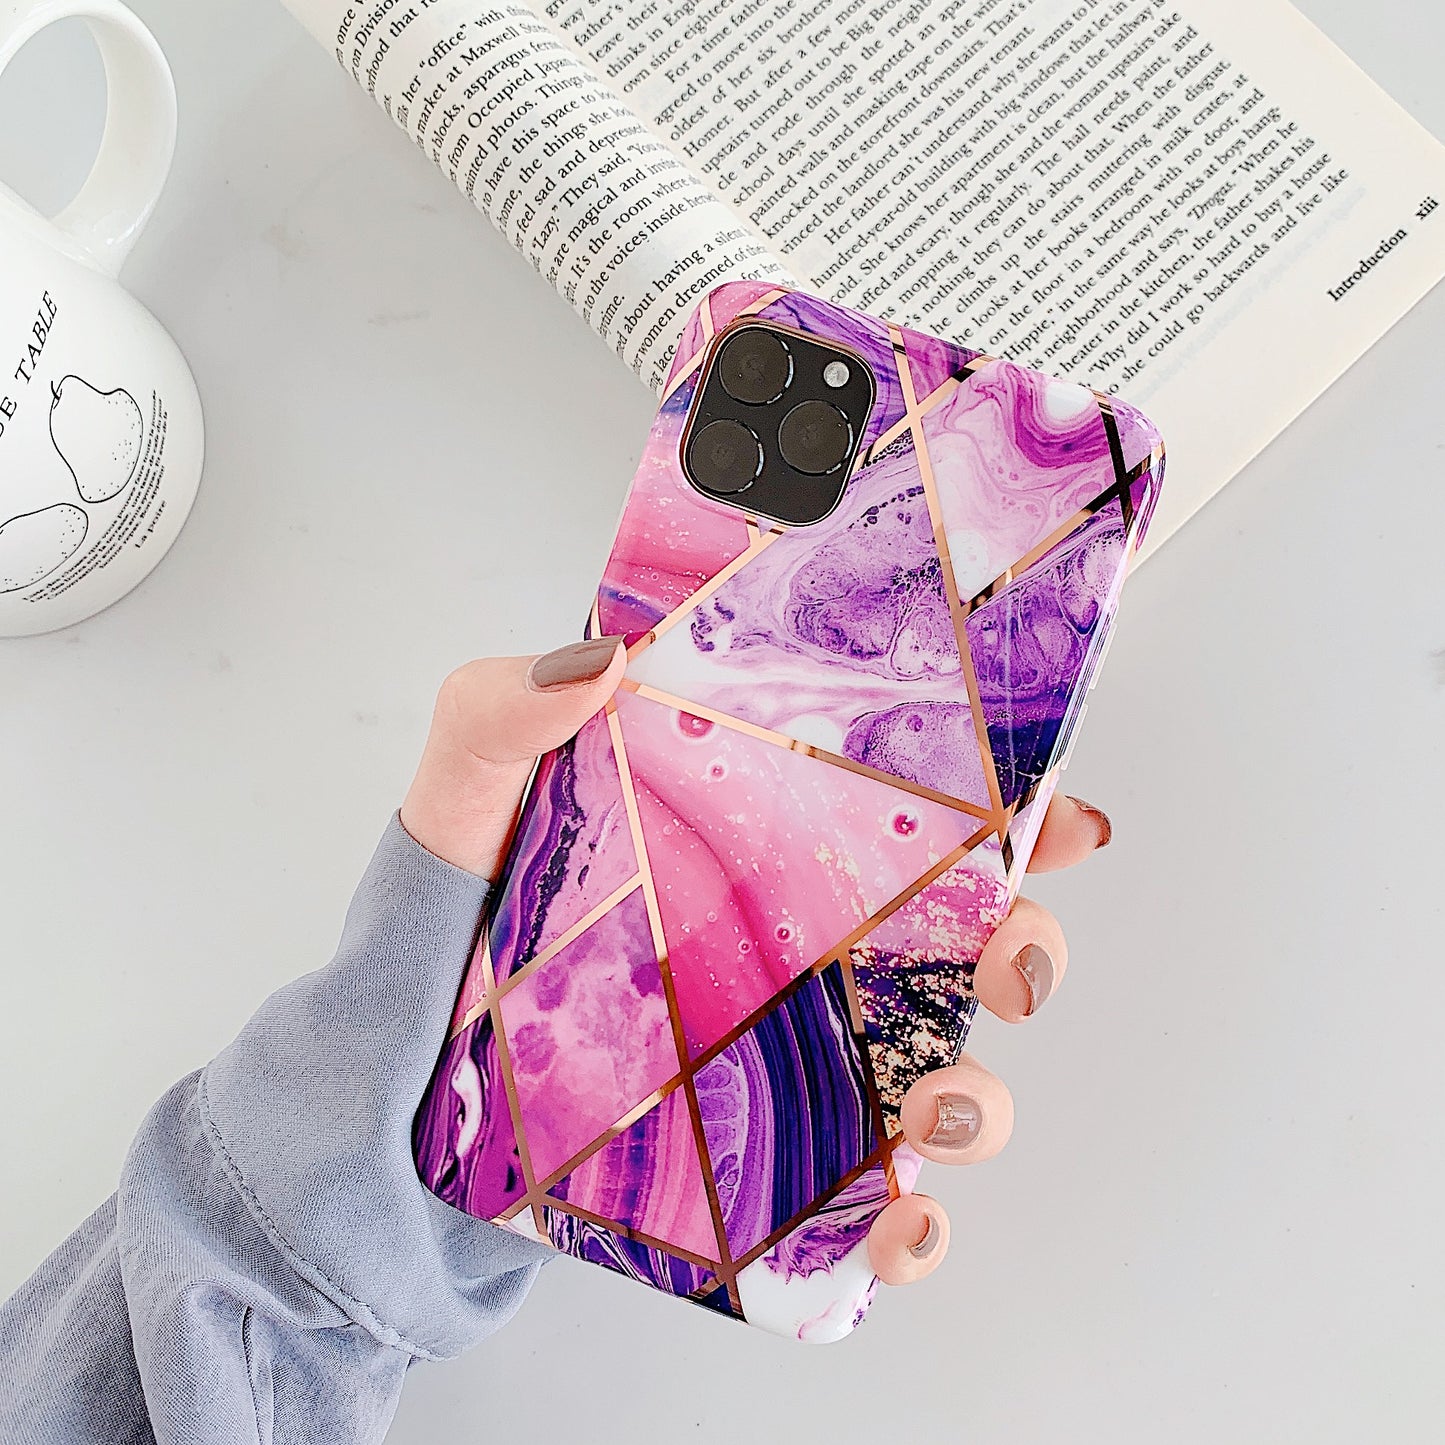 MVYNO iphone quirky purple cover case